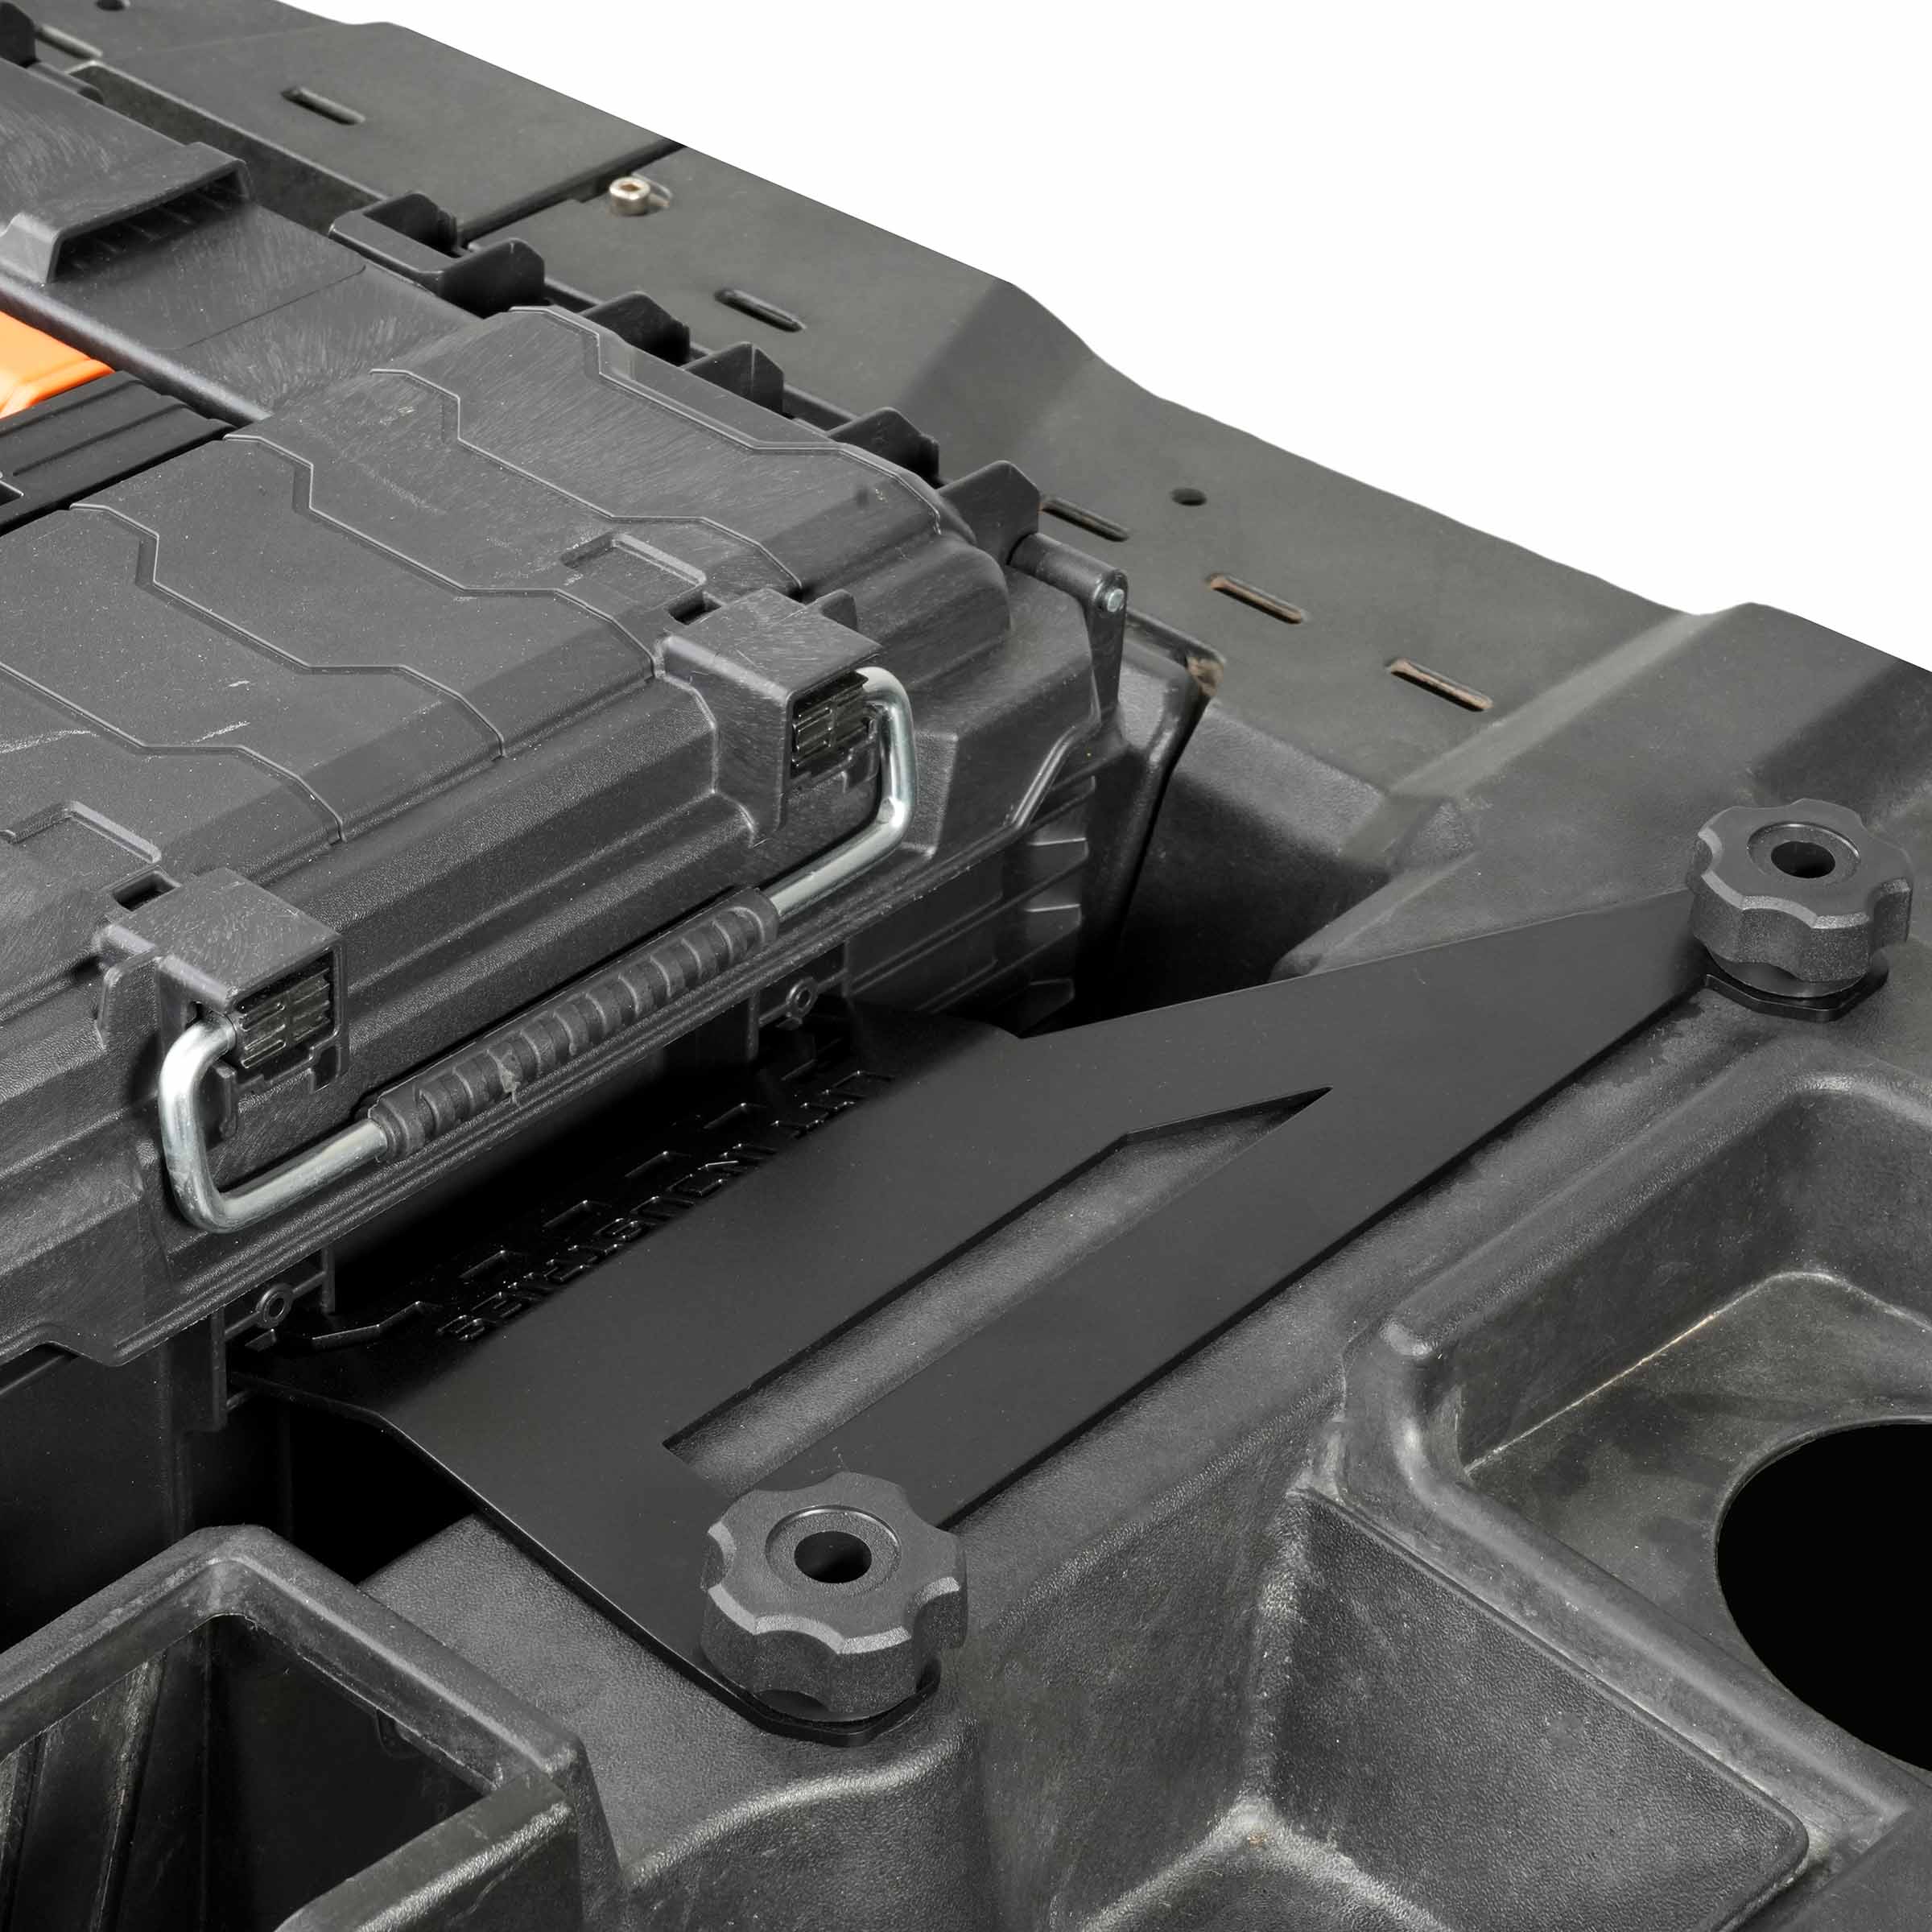 Litt Industries heavy duty ridgid toolbox mounts gen 2 for polaris rzr xp or turbo or turbo s the best toolbox mounts